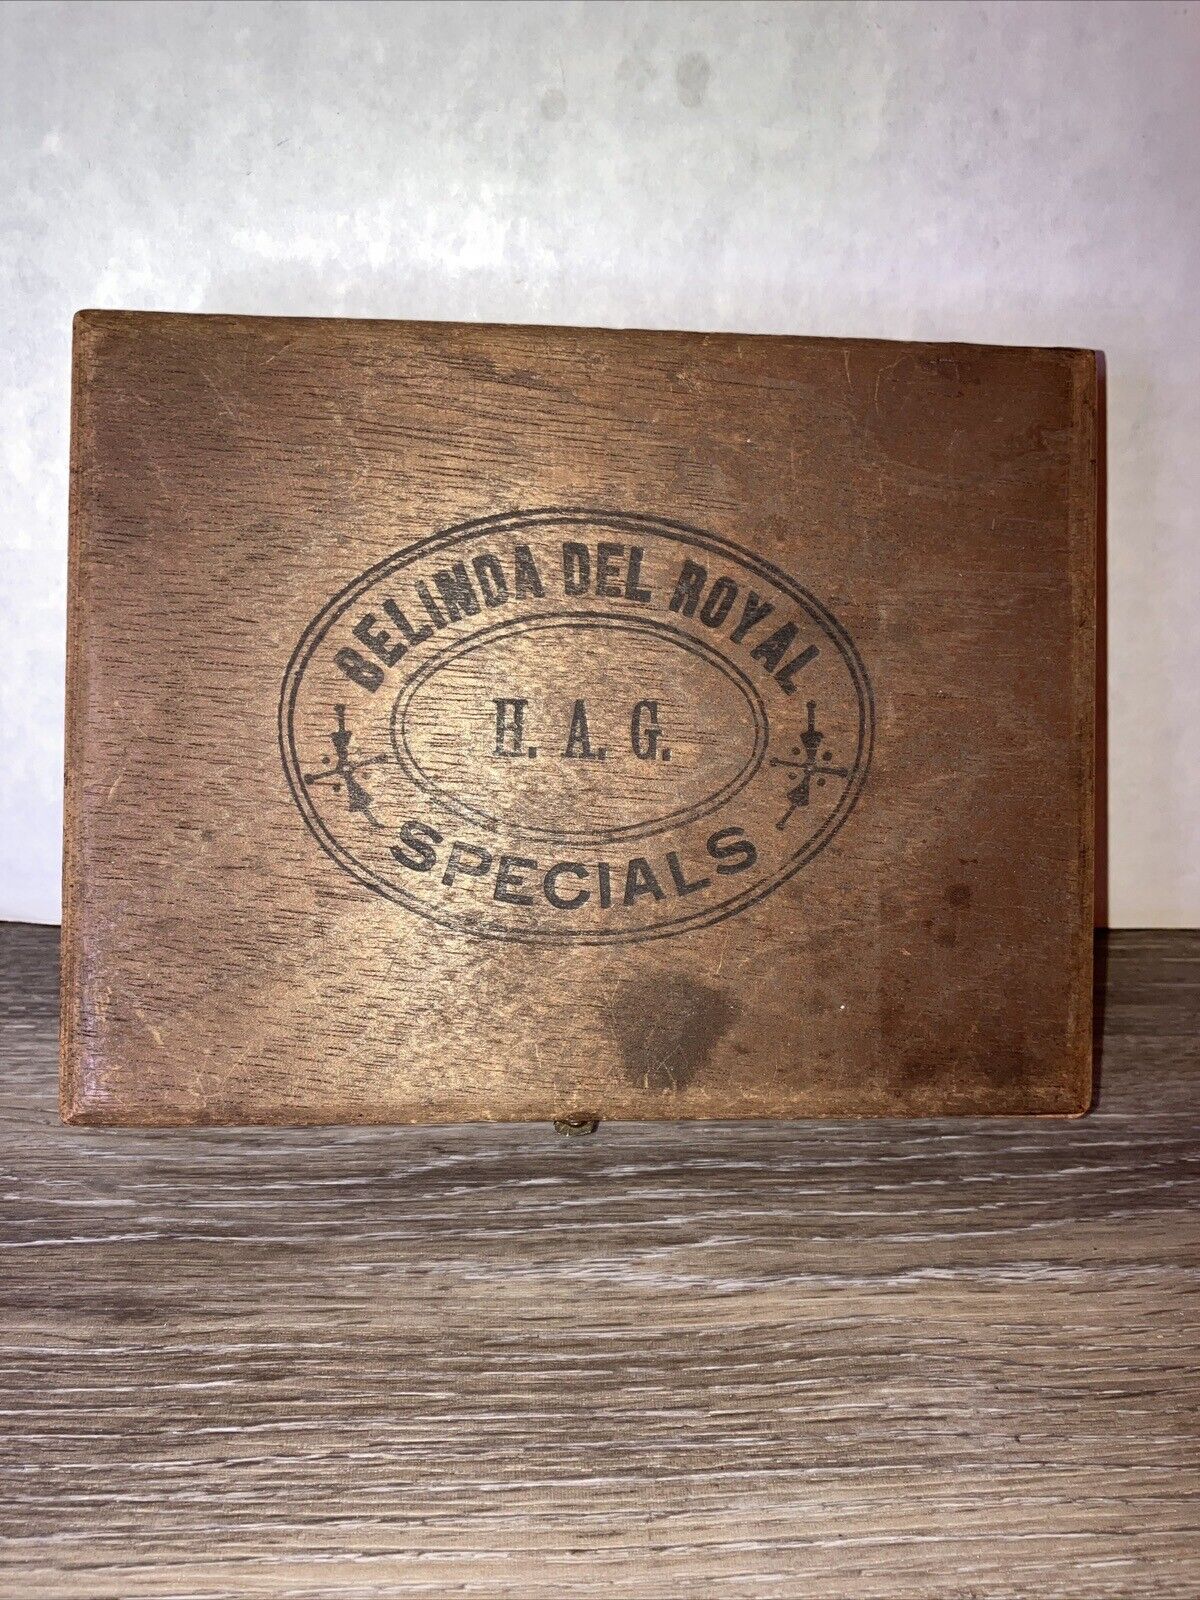 Vintage Belinda Del Royale Specials H. A. G. Wood Cigar Box - Empty